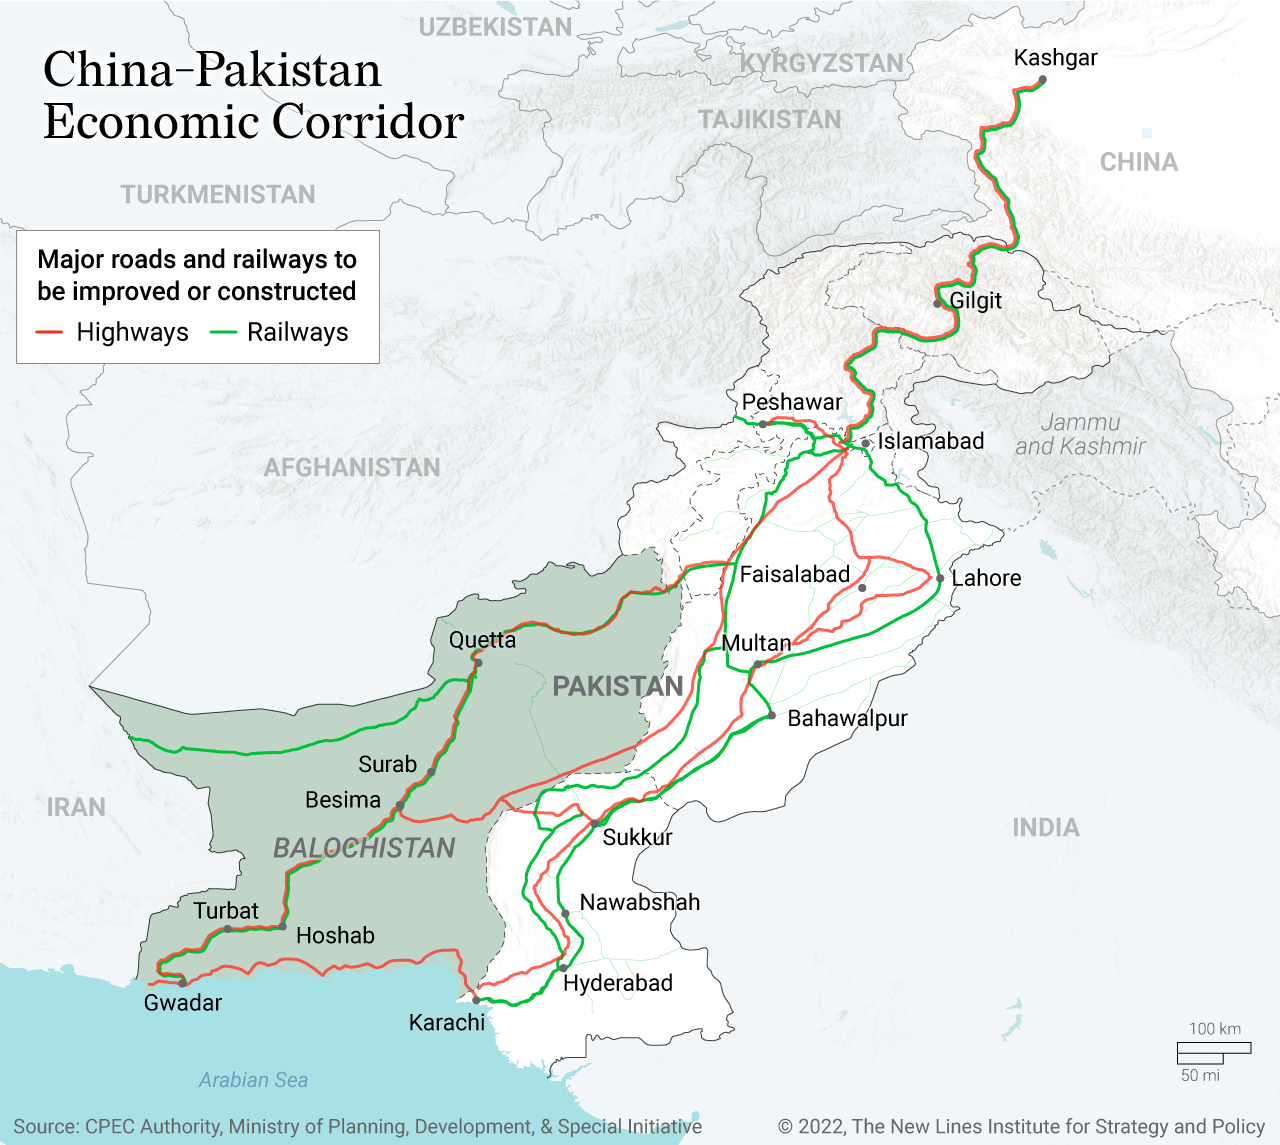 Balochistan is Pakistan’s largest province by area, provides 40% of Pakistan’s gas production,